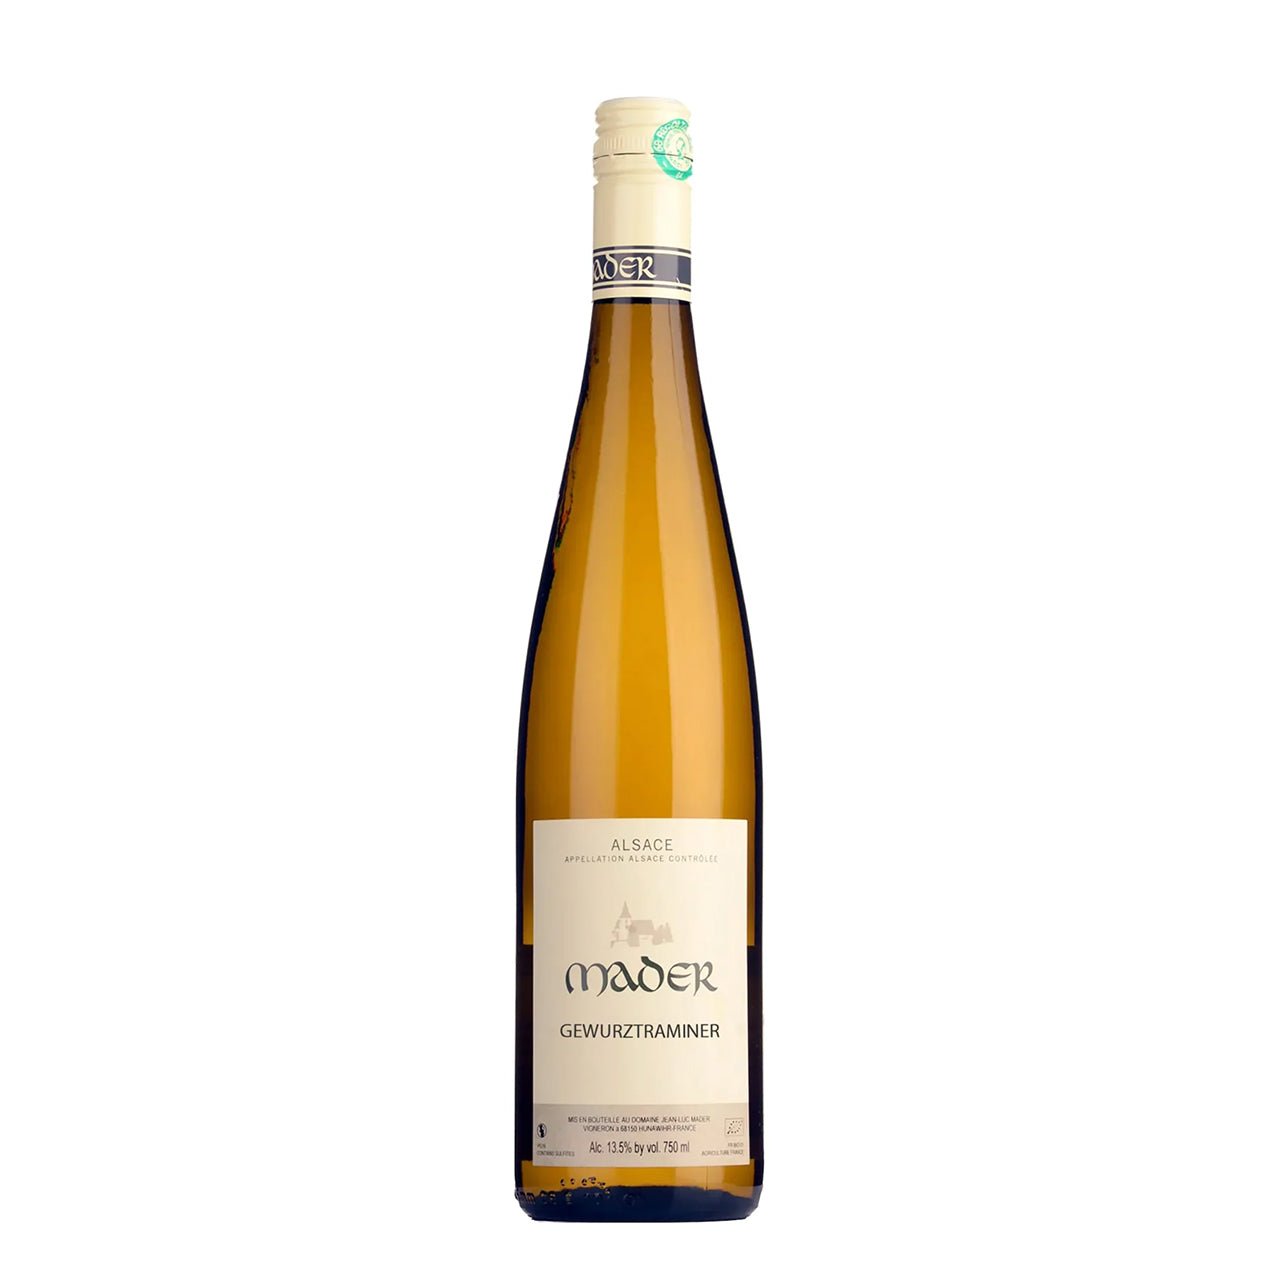 Jean-Luc Mader Gewurztraminer 2020 - Wine France White - Liquor Wine Cave